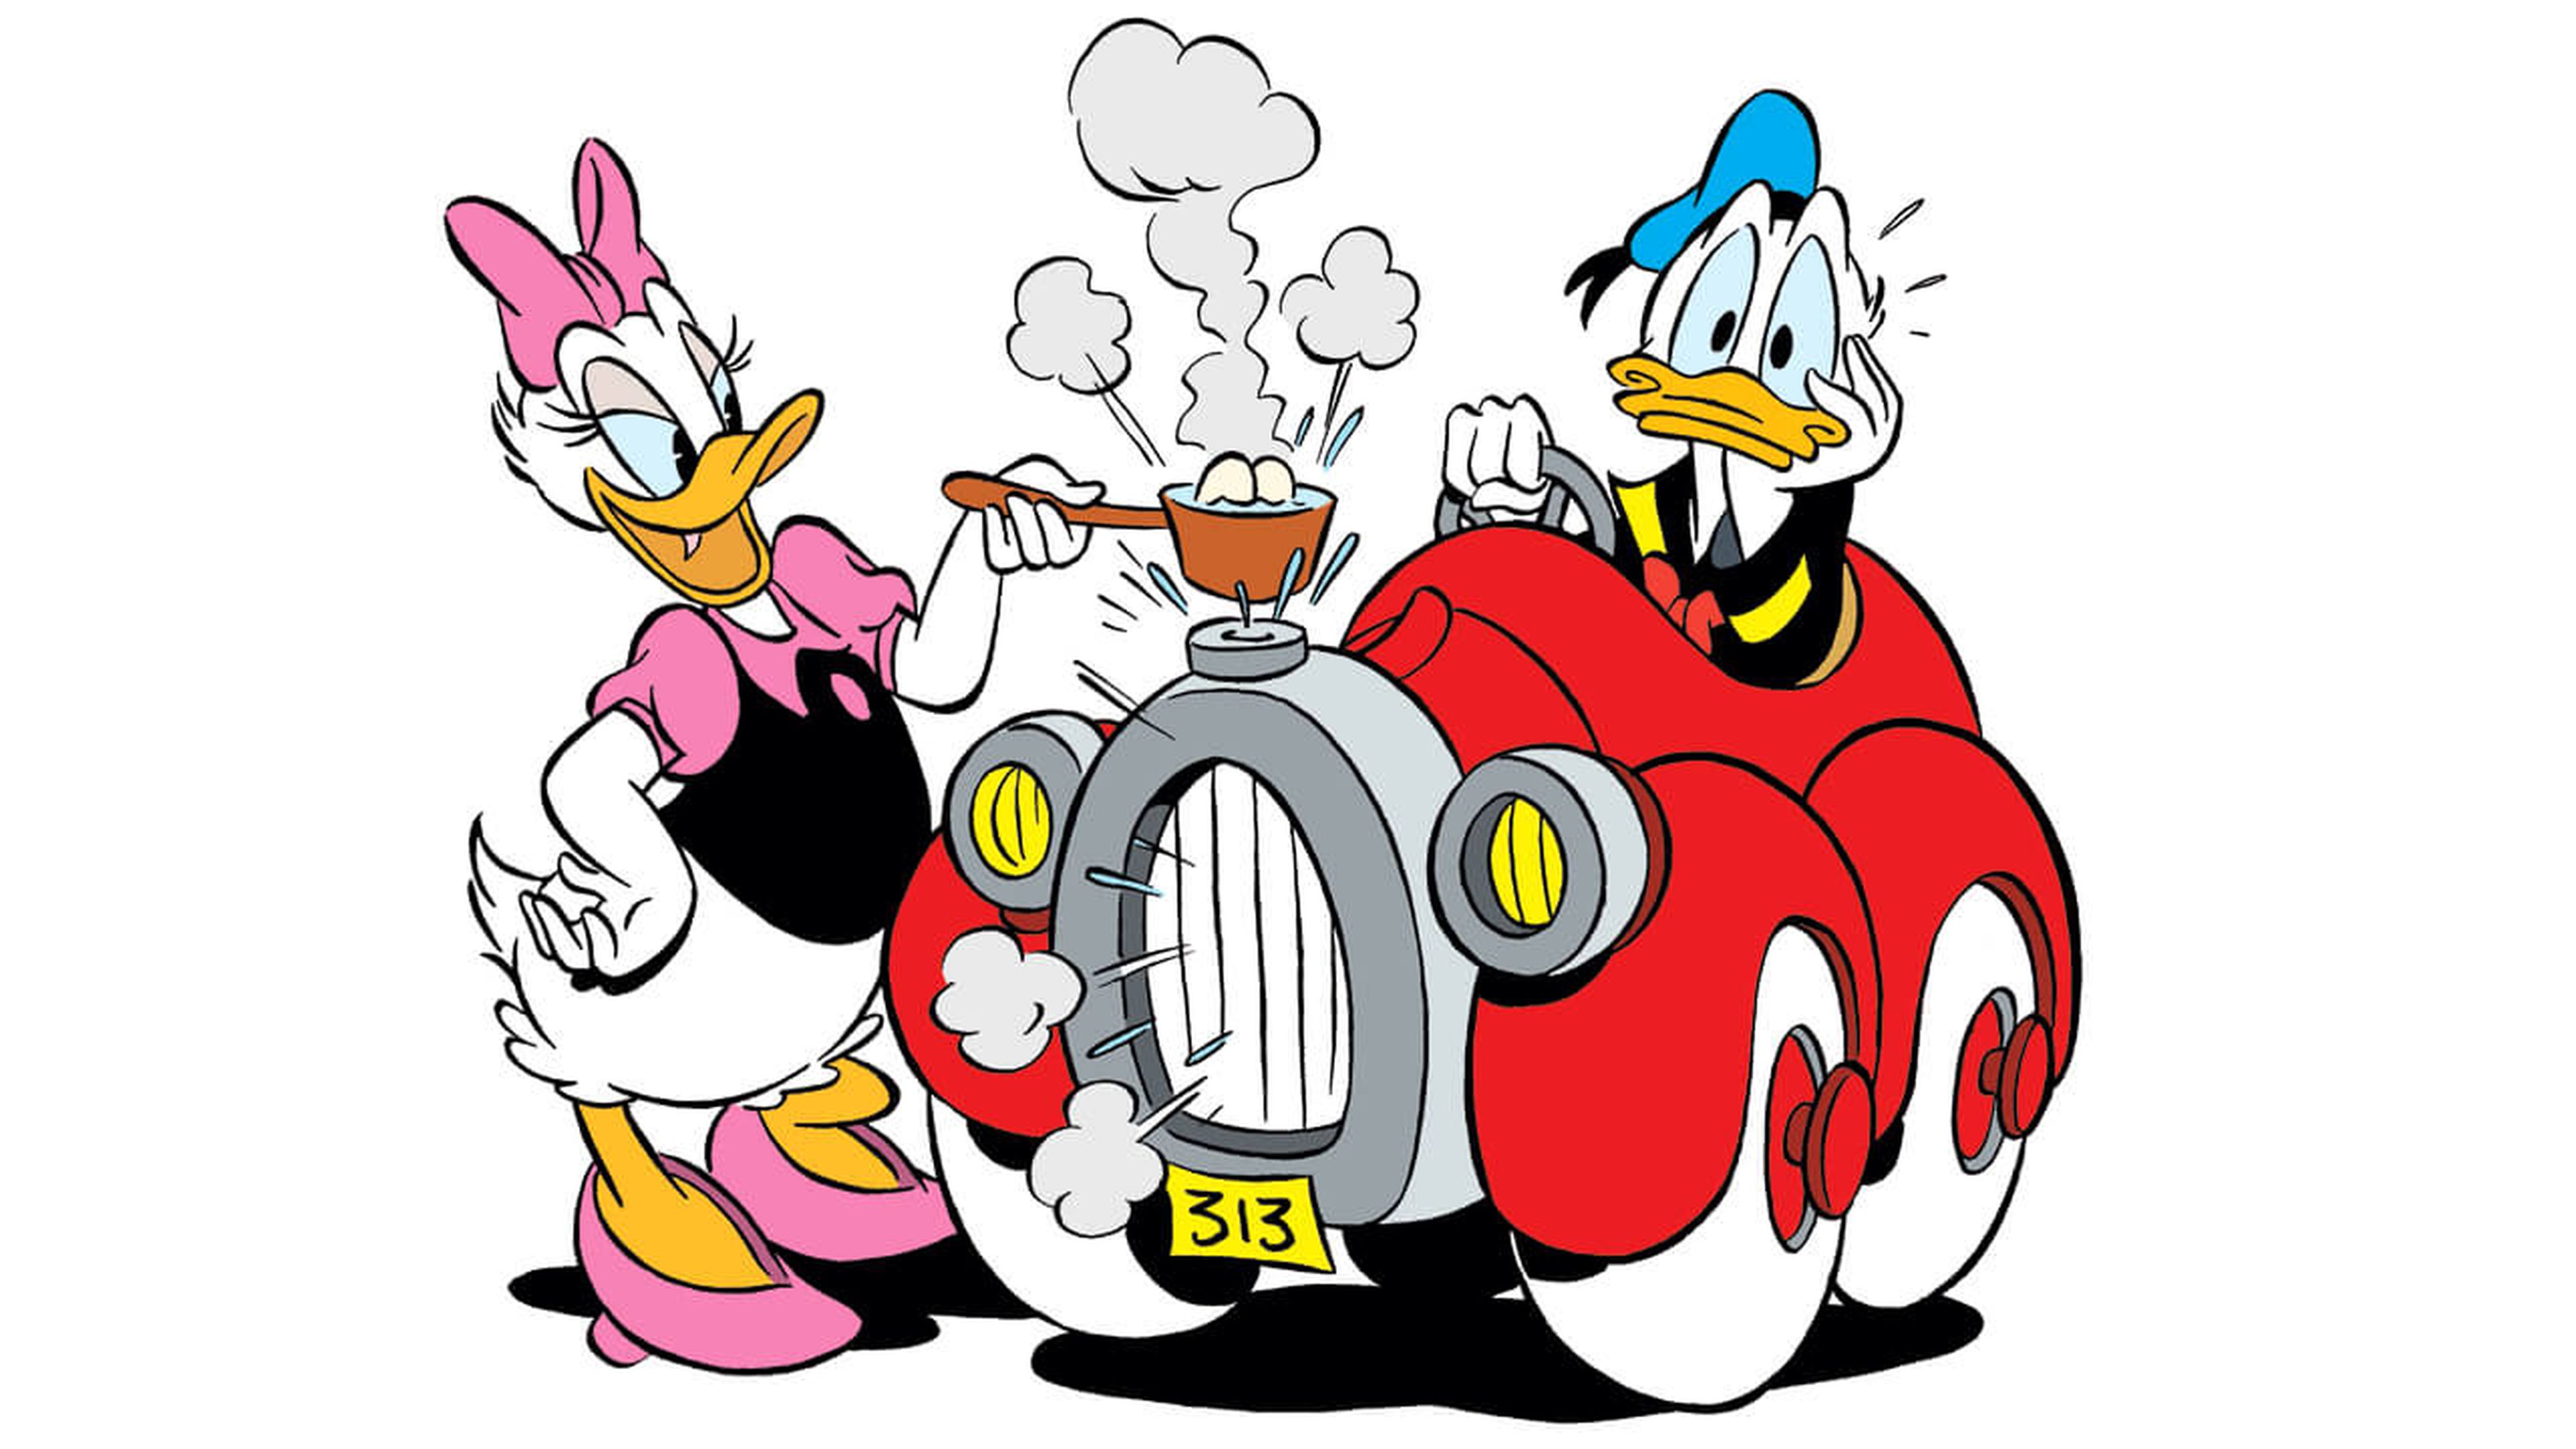 El coche del pato Donald: creando cultura del automóvil